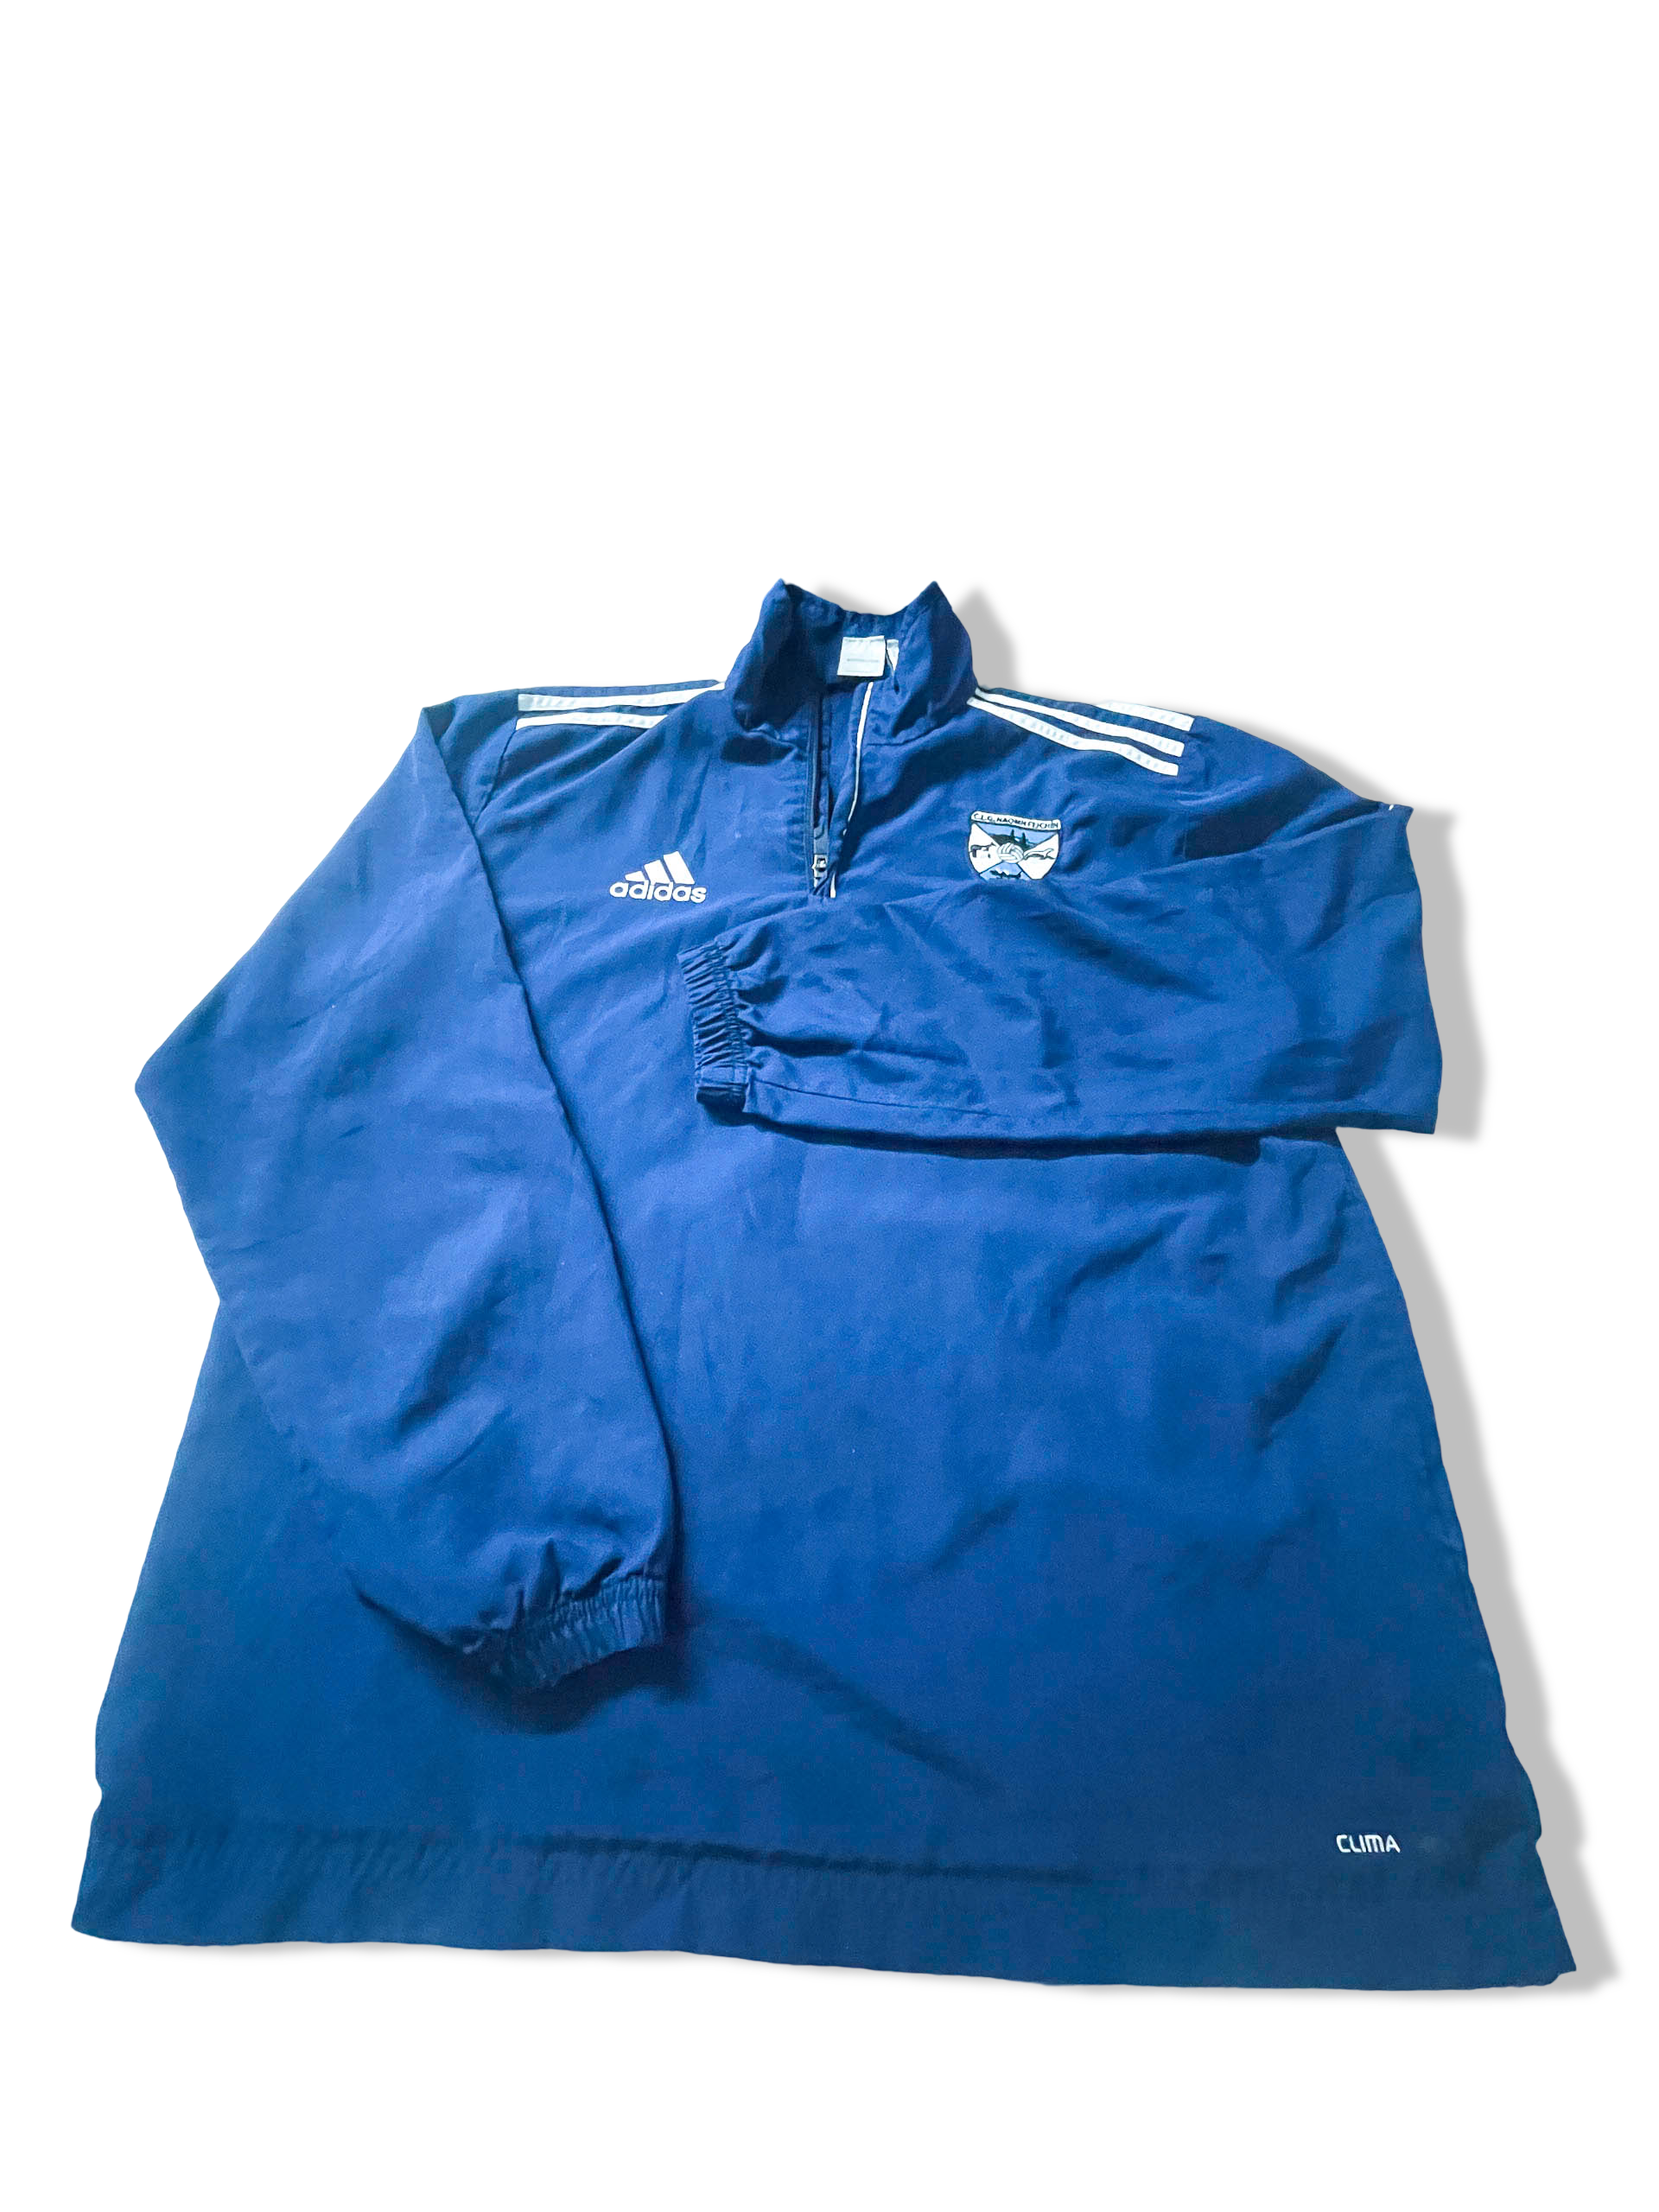 Vintage Men's Adidas 1/4 zip blue sweatshirt in L|L30 W 22|SKU 3884